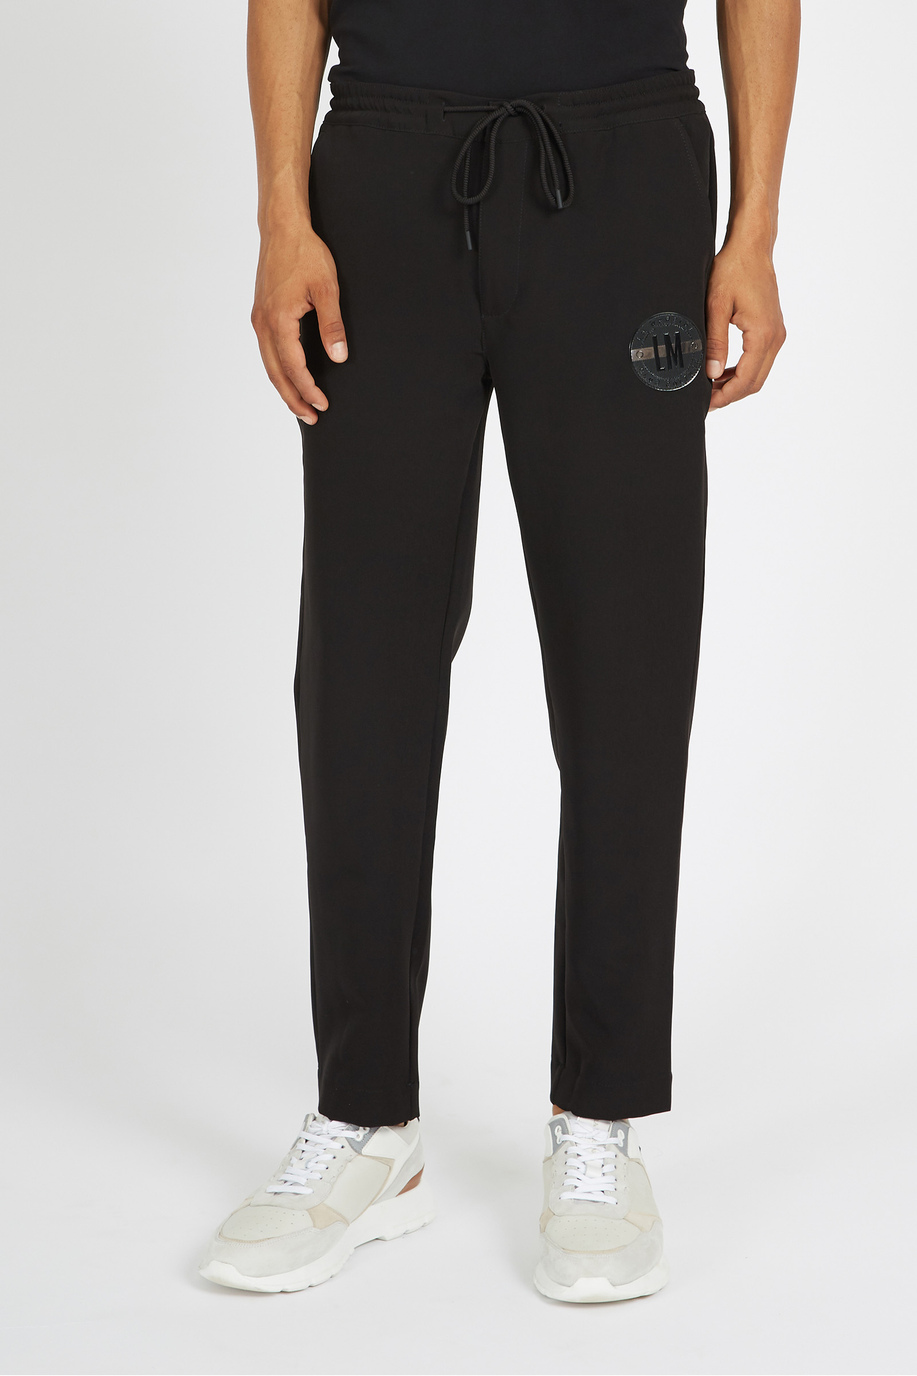 Pantalone da uomo elasticizzato regular fit - Valry - Jet Set | La Martina - Official Online Shop